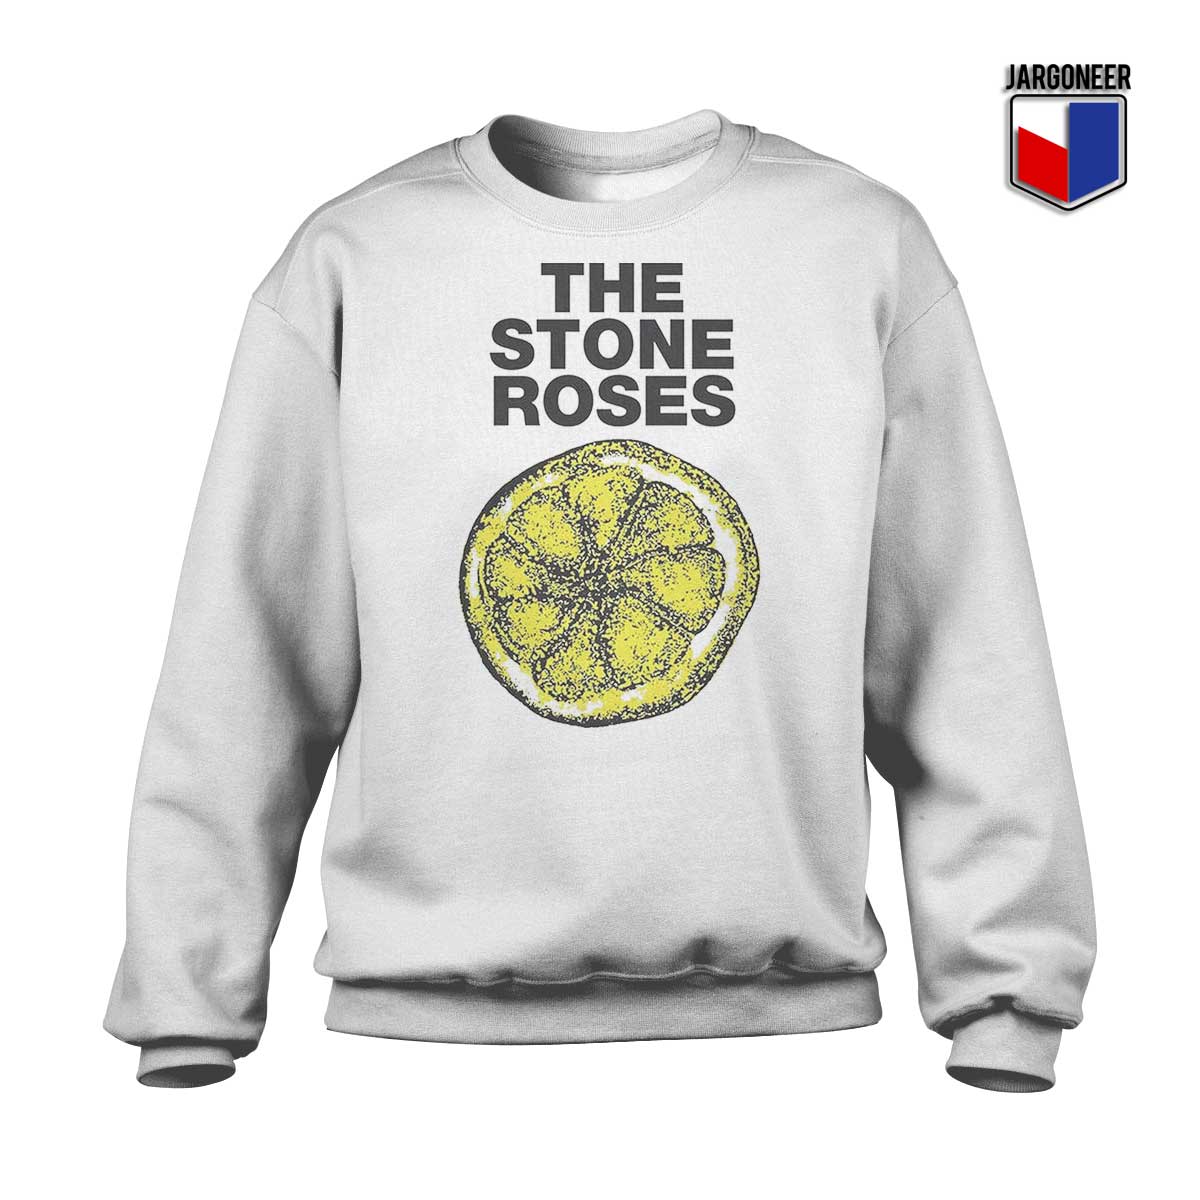 The Stone Roses Sweatshirt - Shop Unique Graphic Cool Shirt Designs